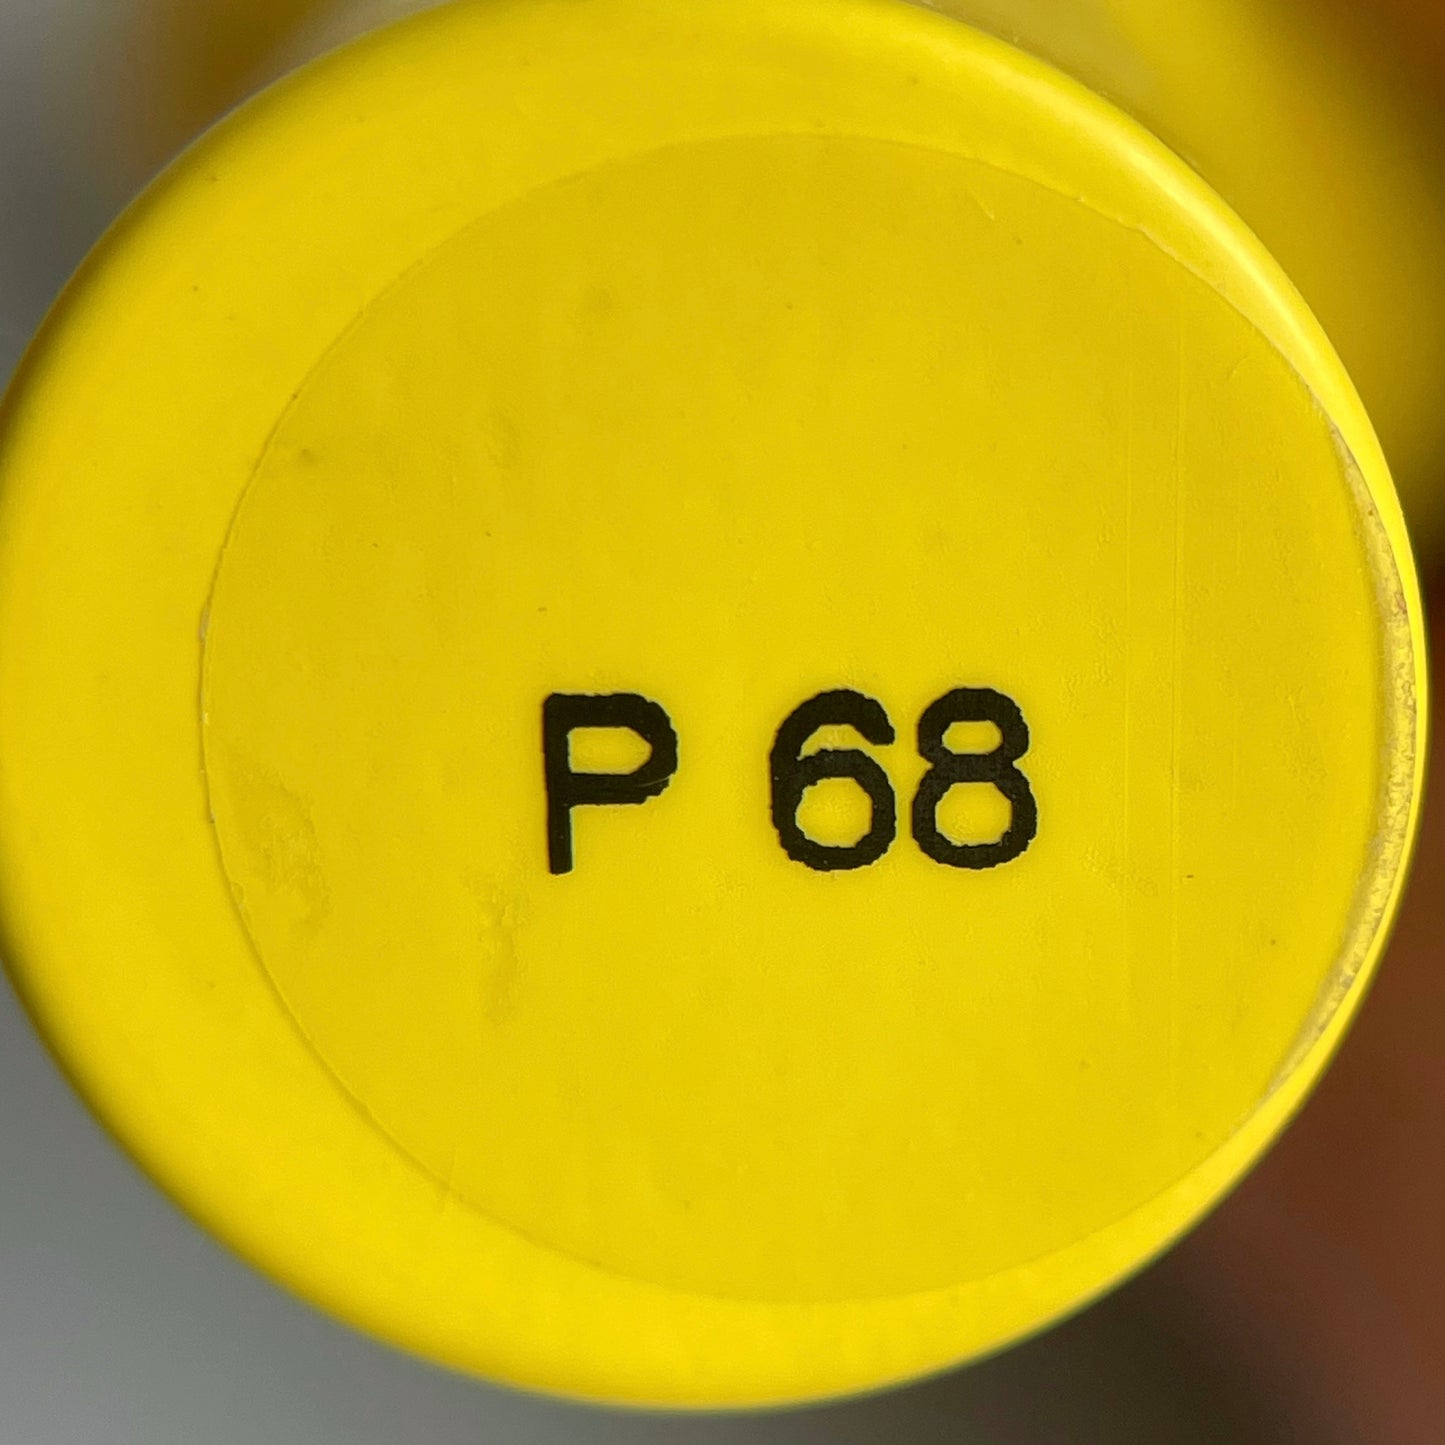 PLIY Gel Color P68 (10 g)